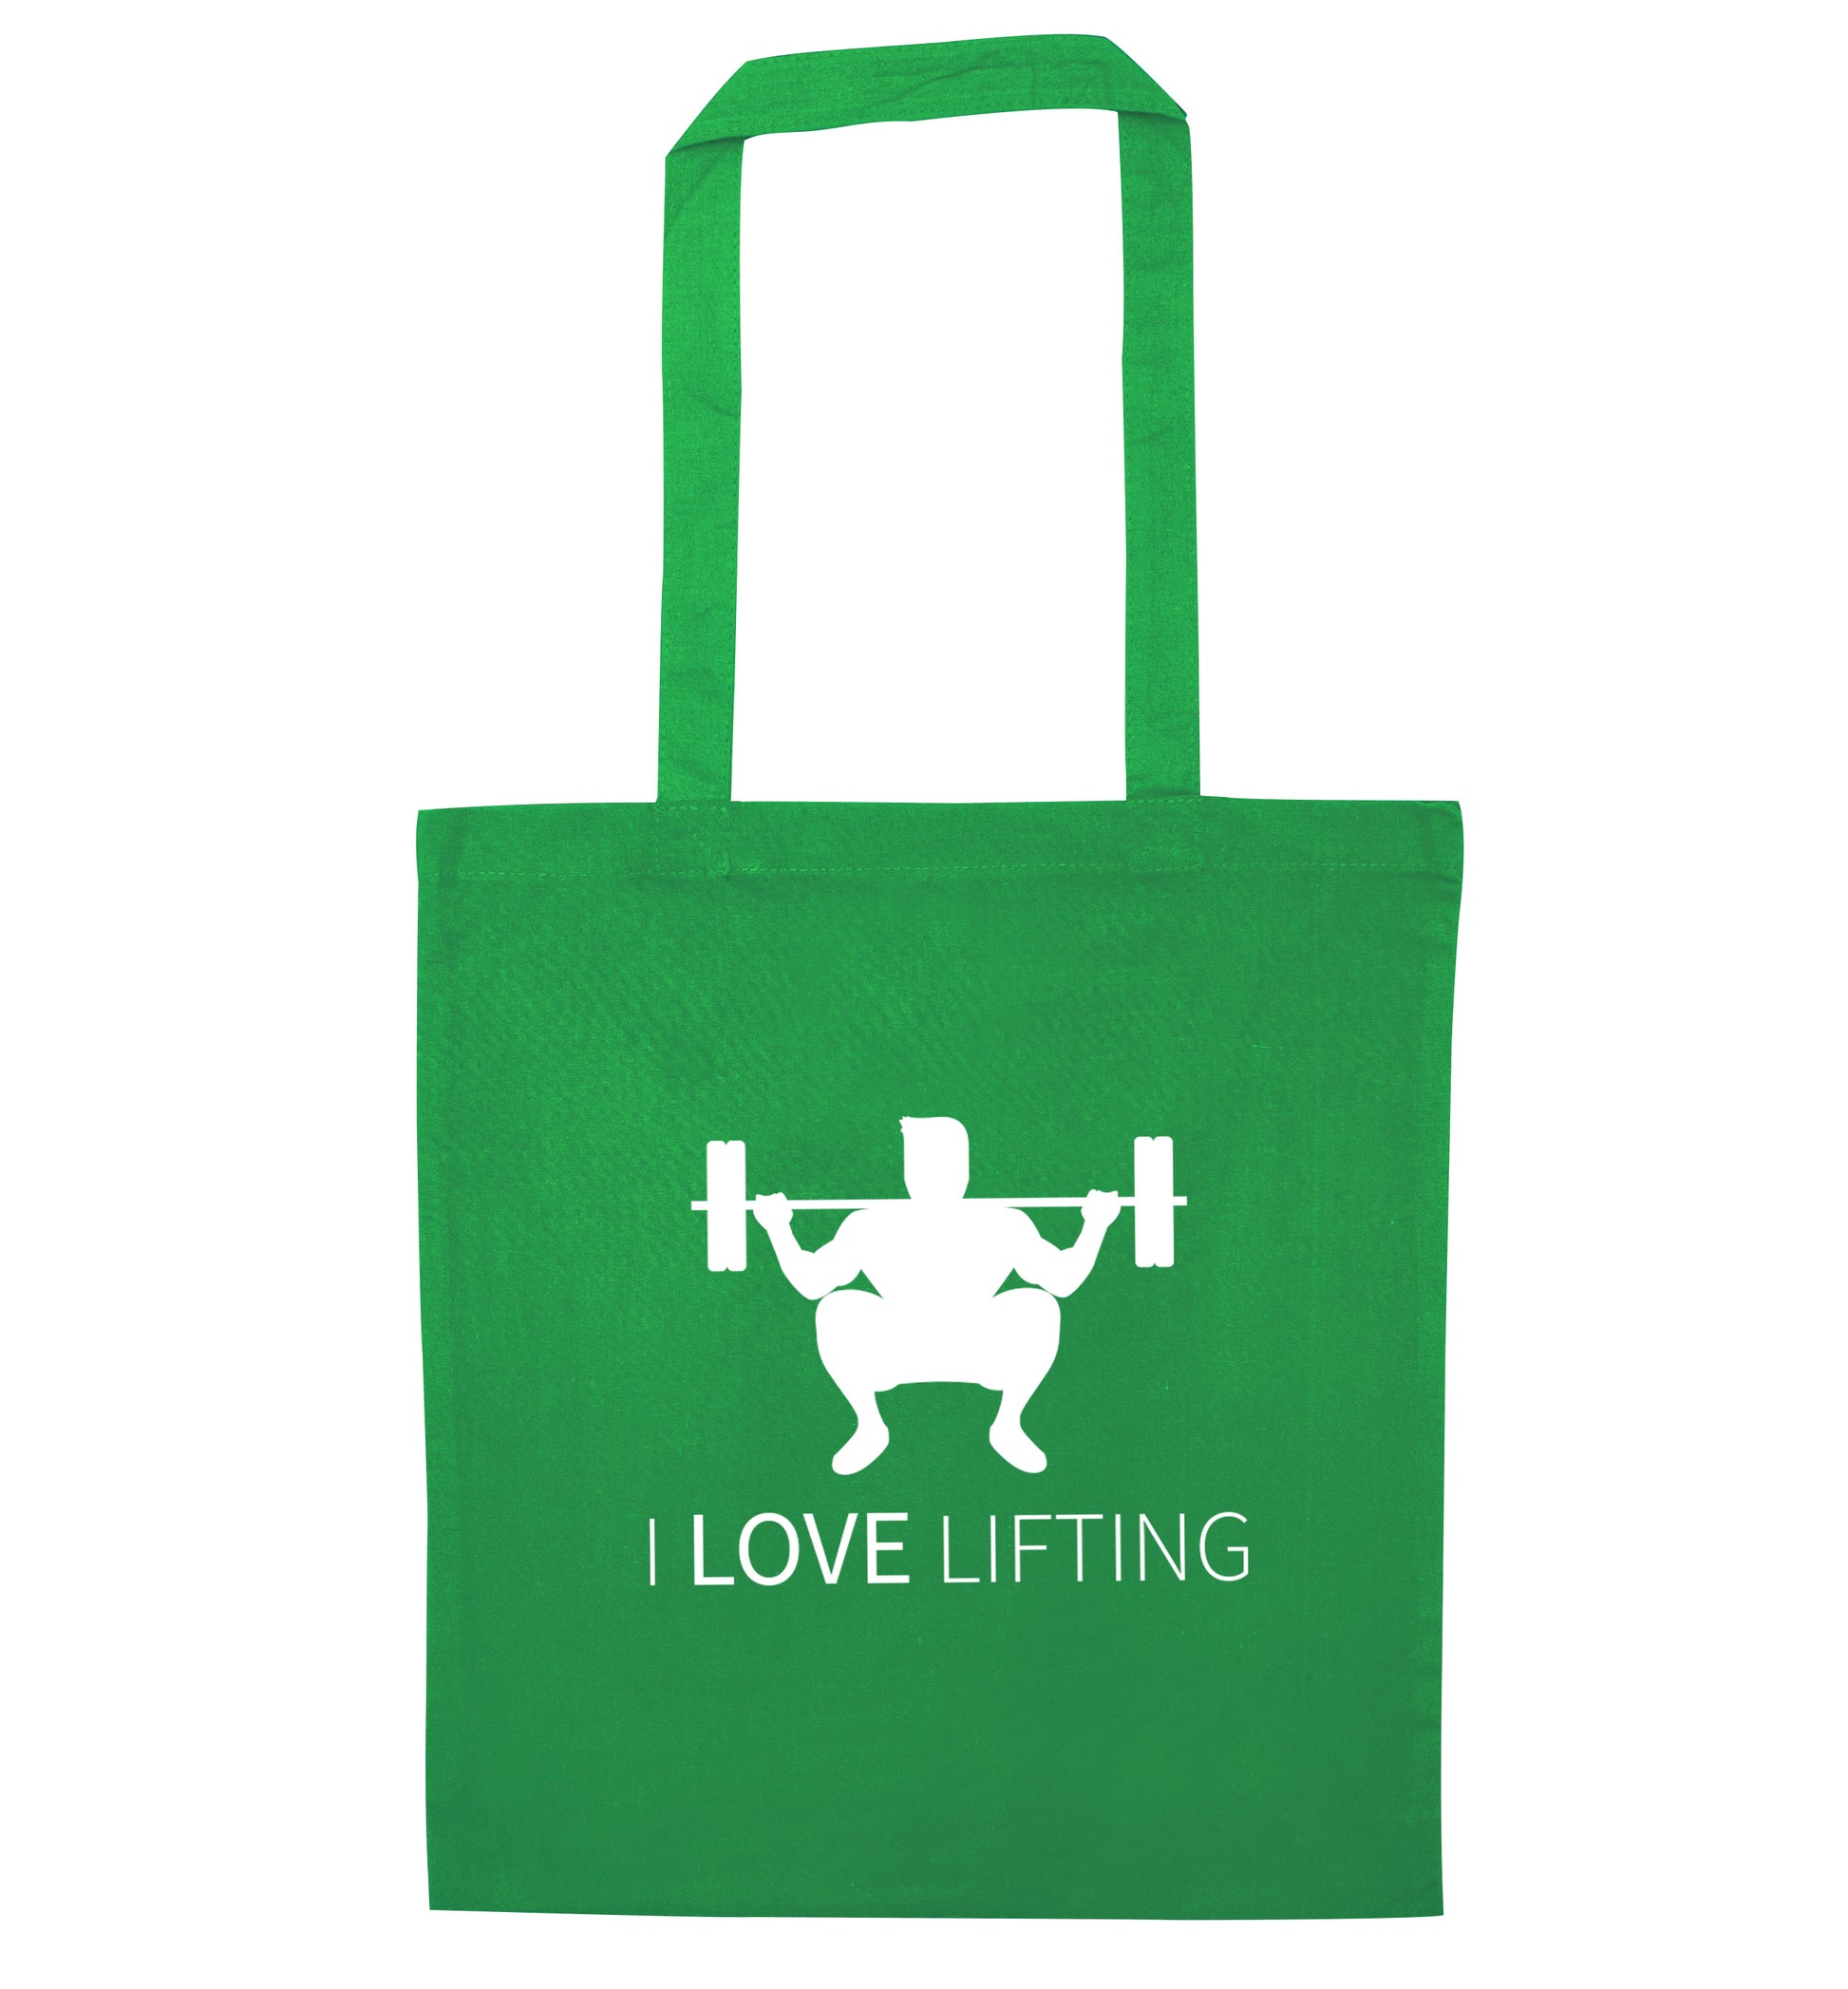 I Love Lifting green tote bag